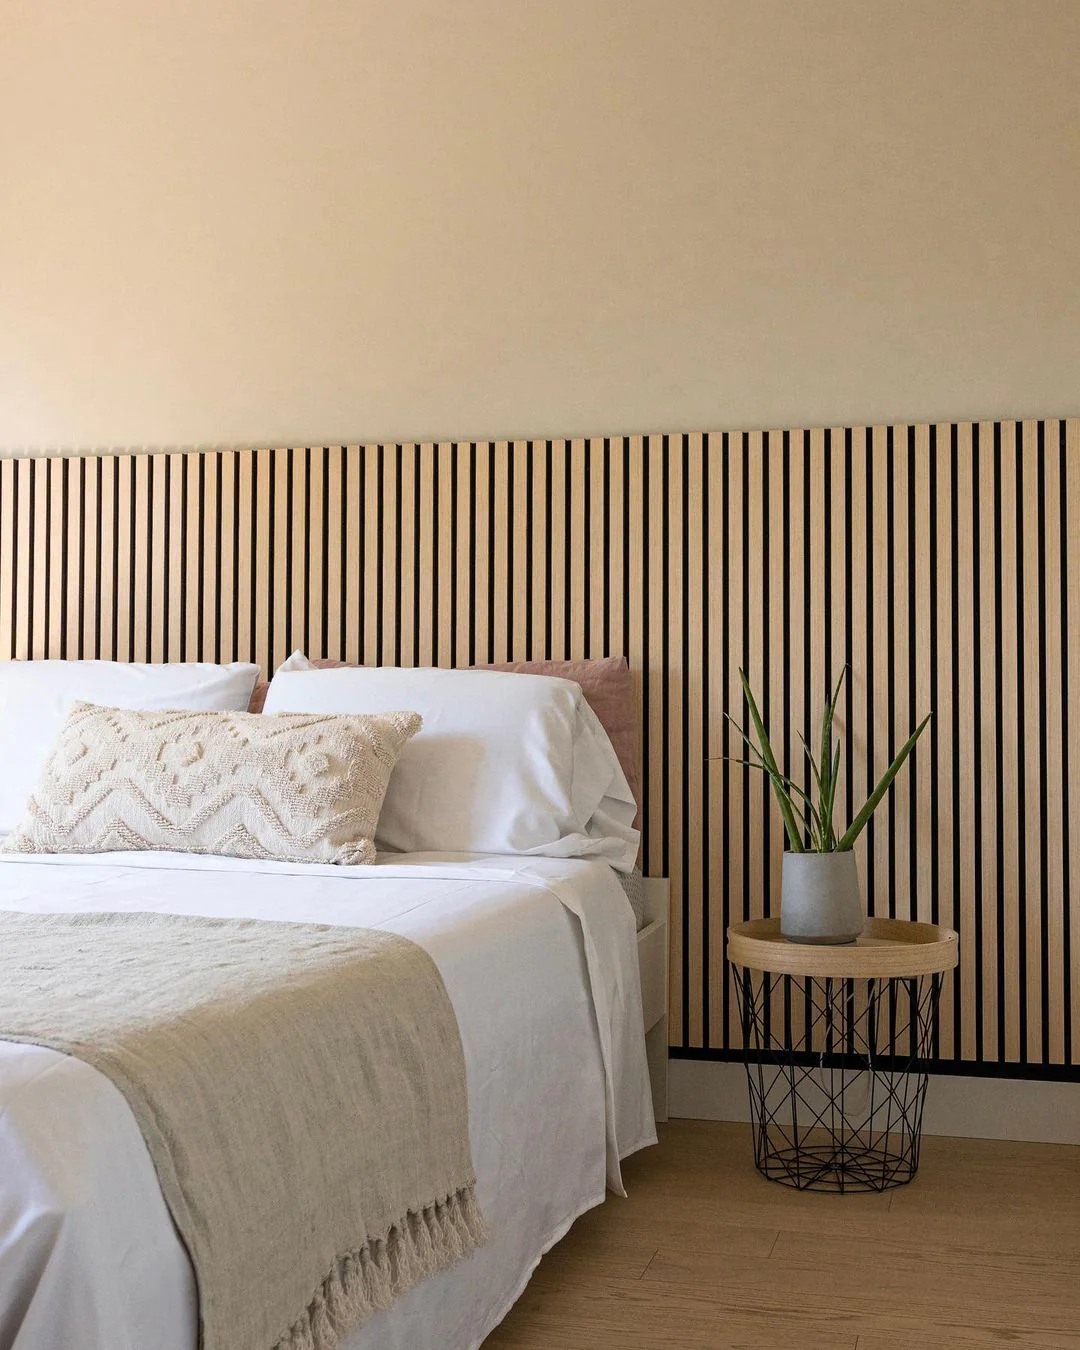 03-oak-wood-slat-wall-panels-behind-bed-in-japandi-bedroom